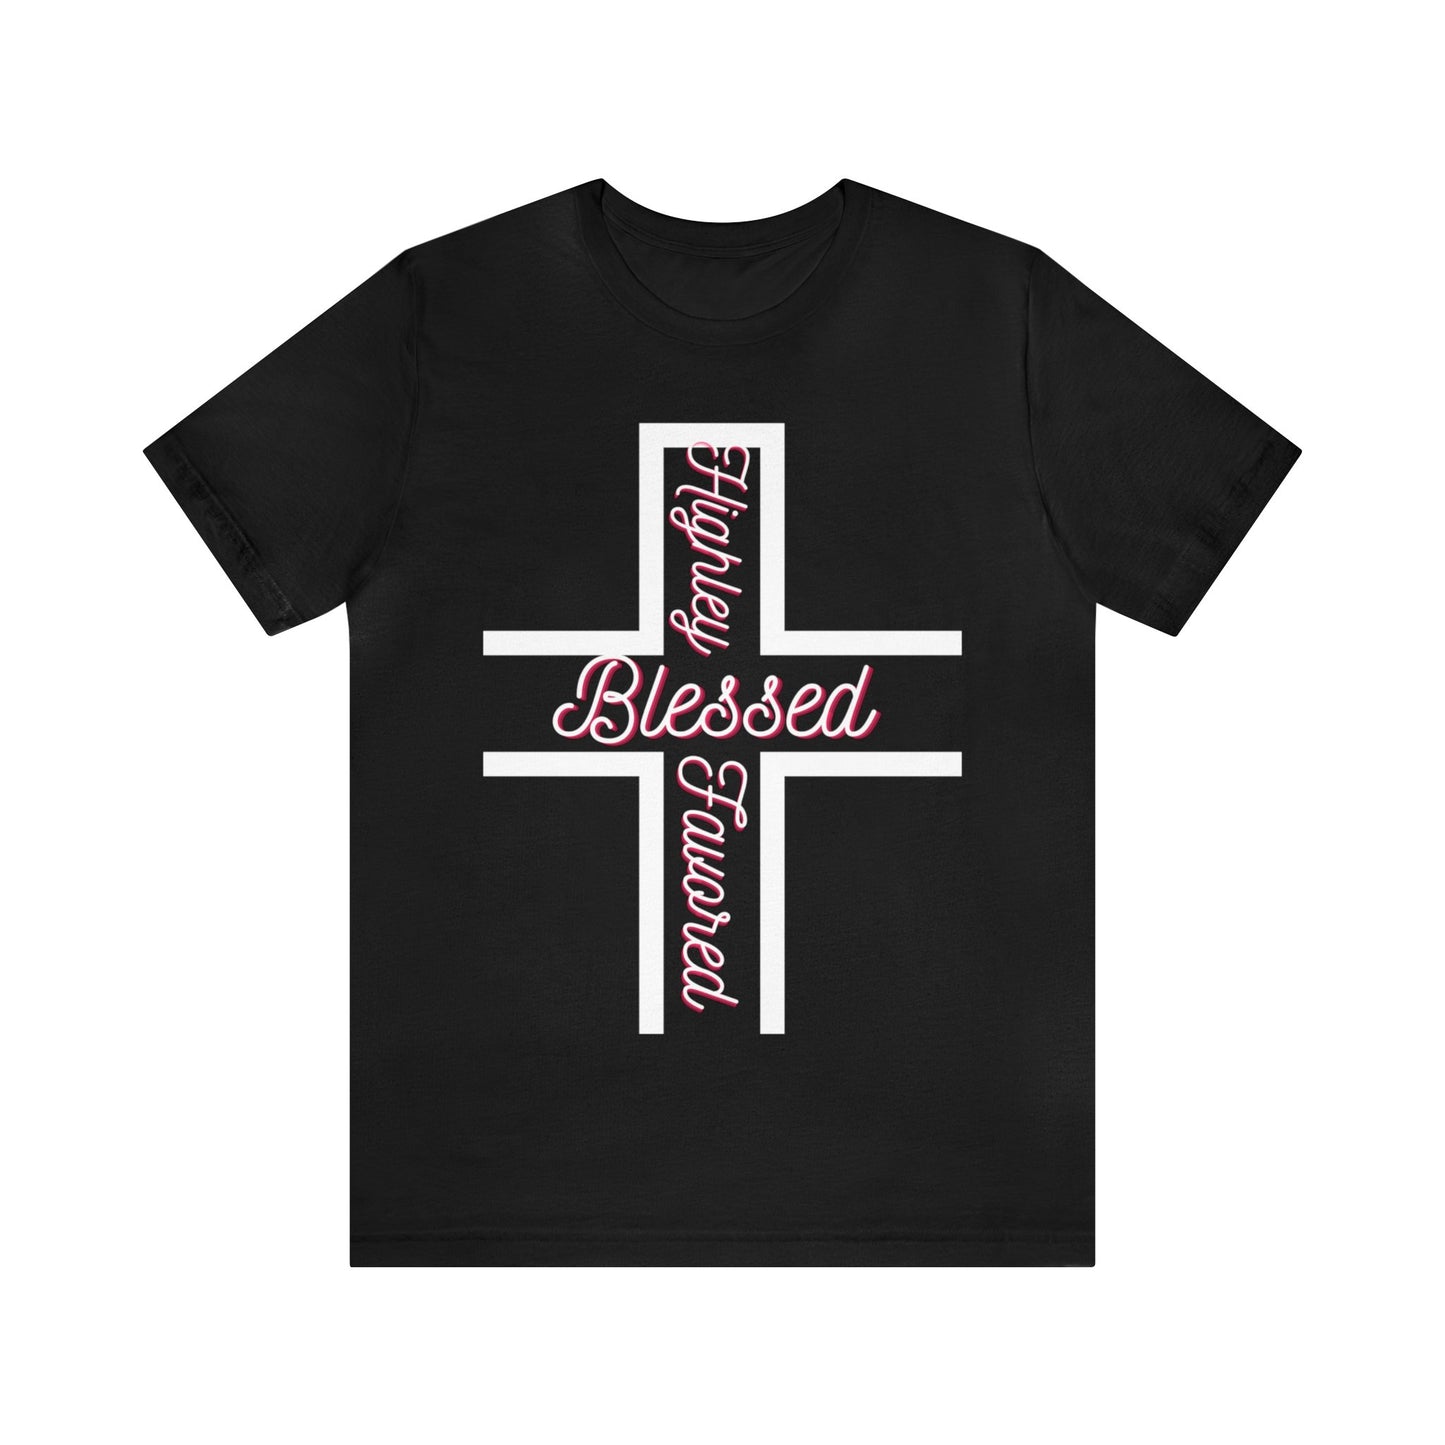 Christian "Blessed -N- Highly Favored" T- Shirt, Christian T-Shirt, Religious Shirt